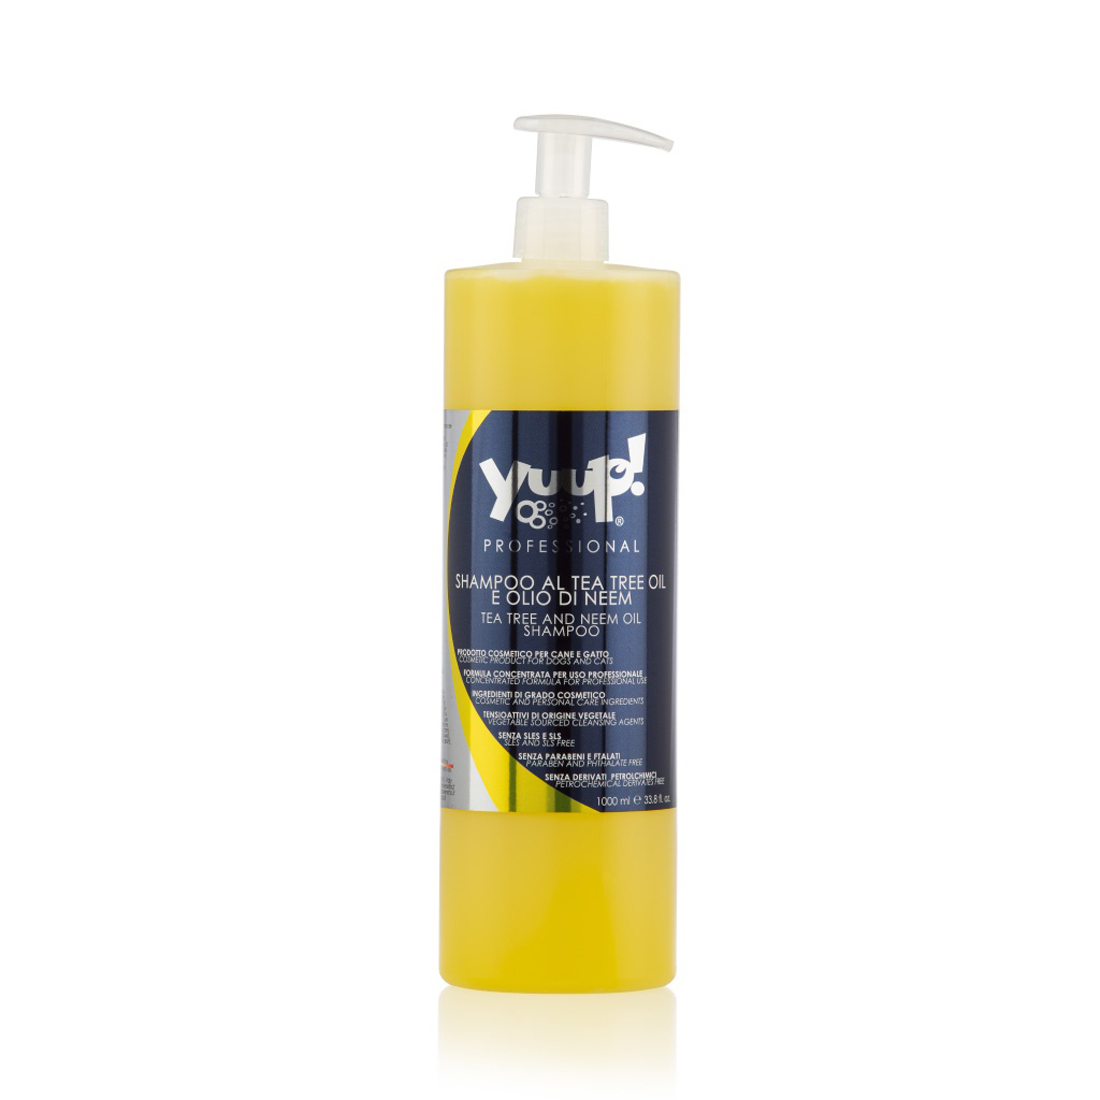 Yuup! Professional Shampoo Antiparasit Teebaum- und Neemöl